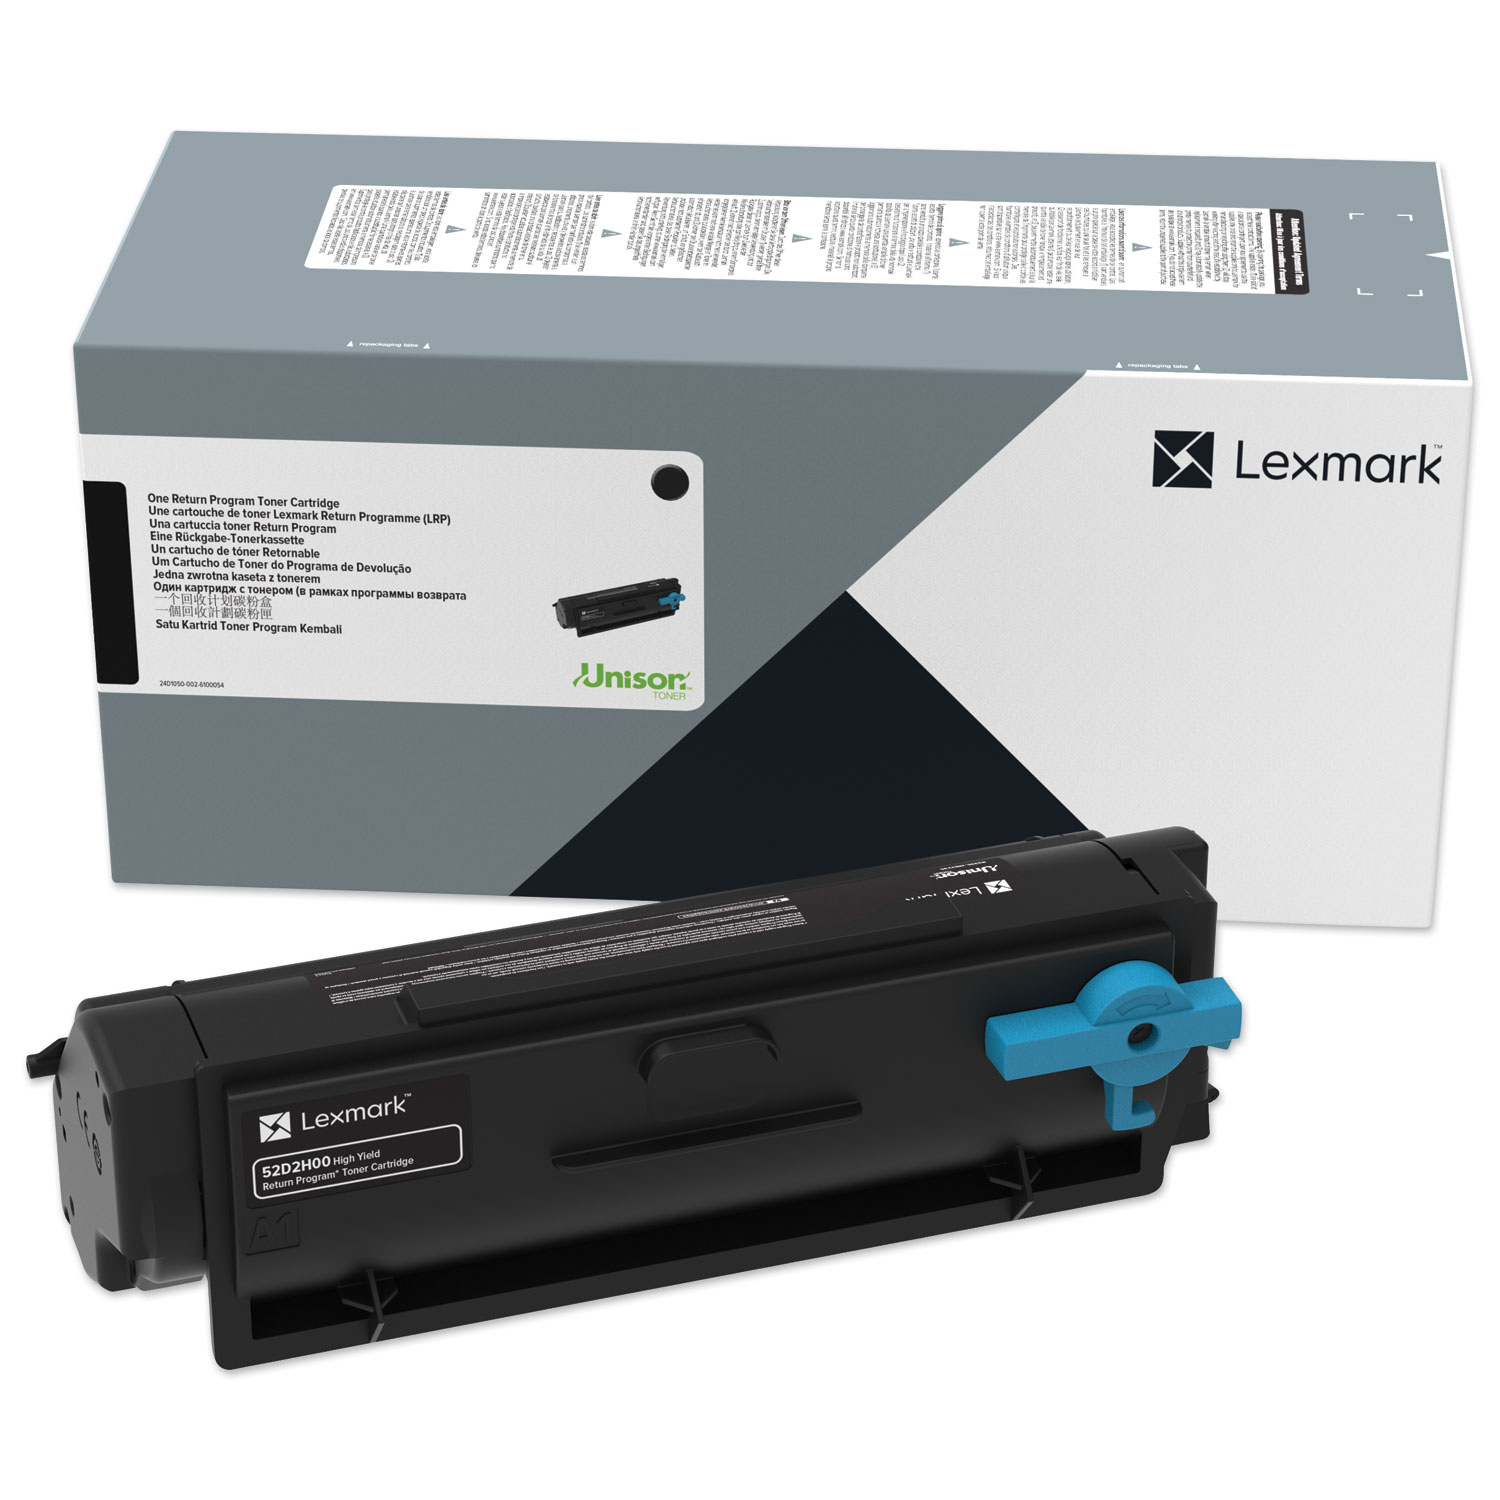  Lexmark B341H00 B341H00 High-Yield Return Program Toner Cartridge, 3,000 Page-Yield, Black (LEXB341H00) 